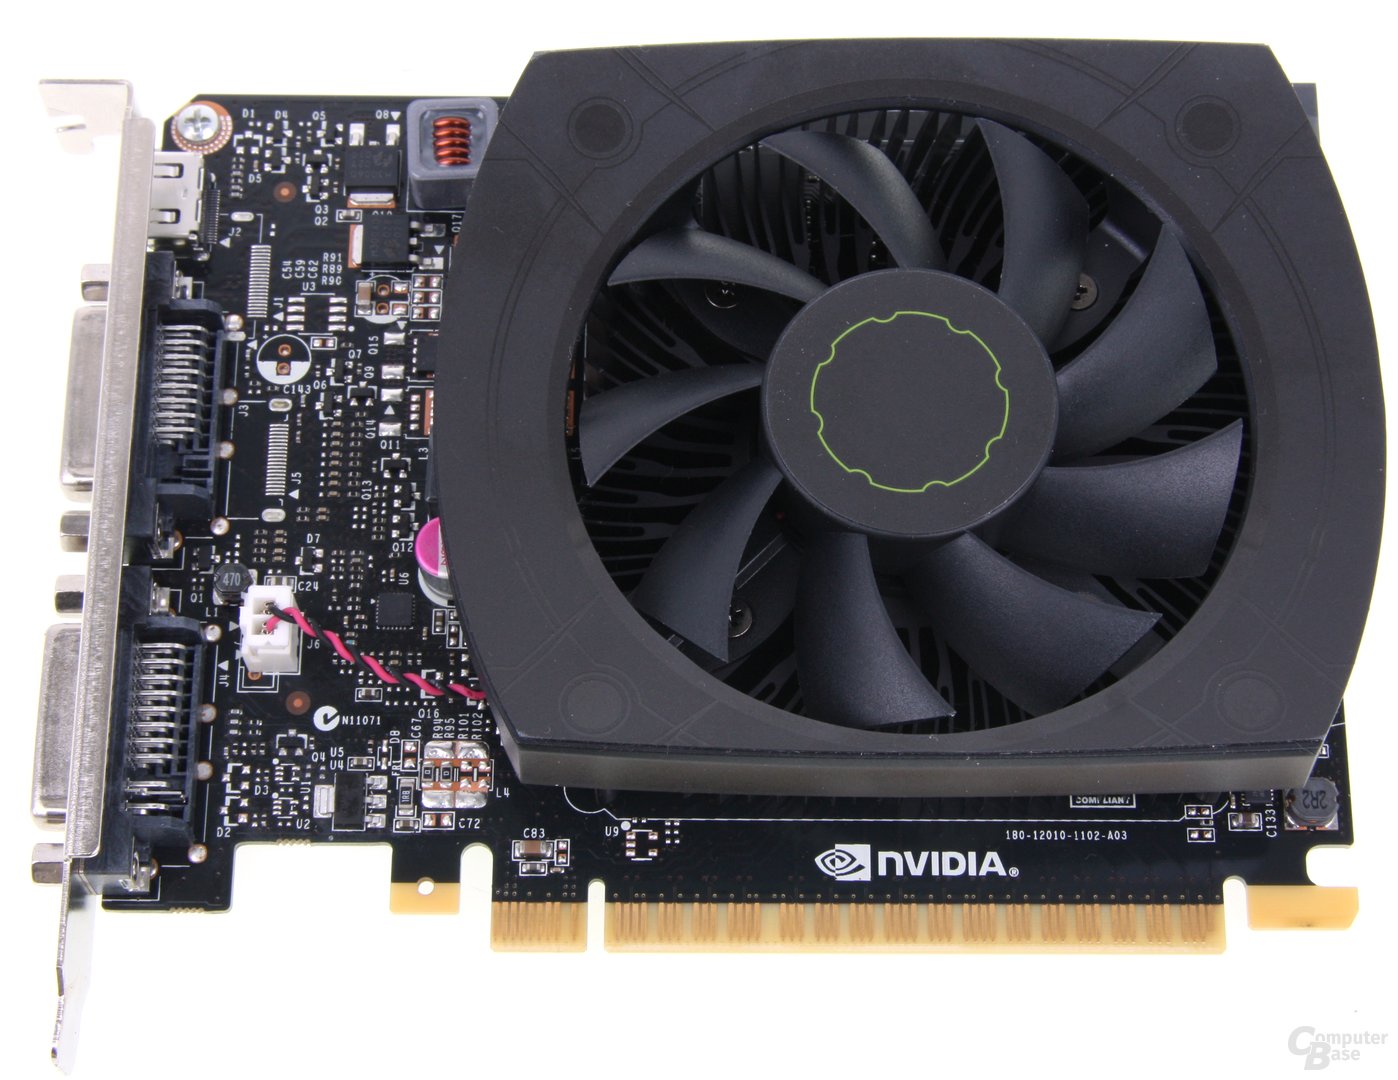 Nvidia GeForce GTX 650 Ti